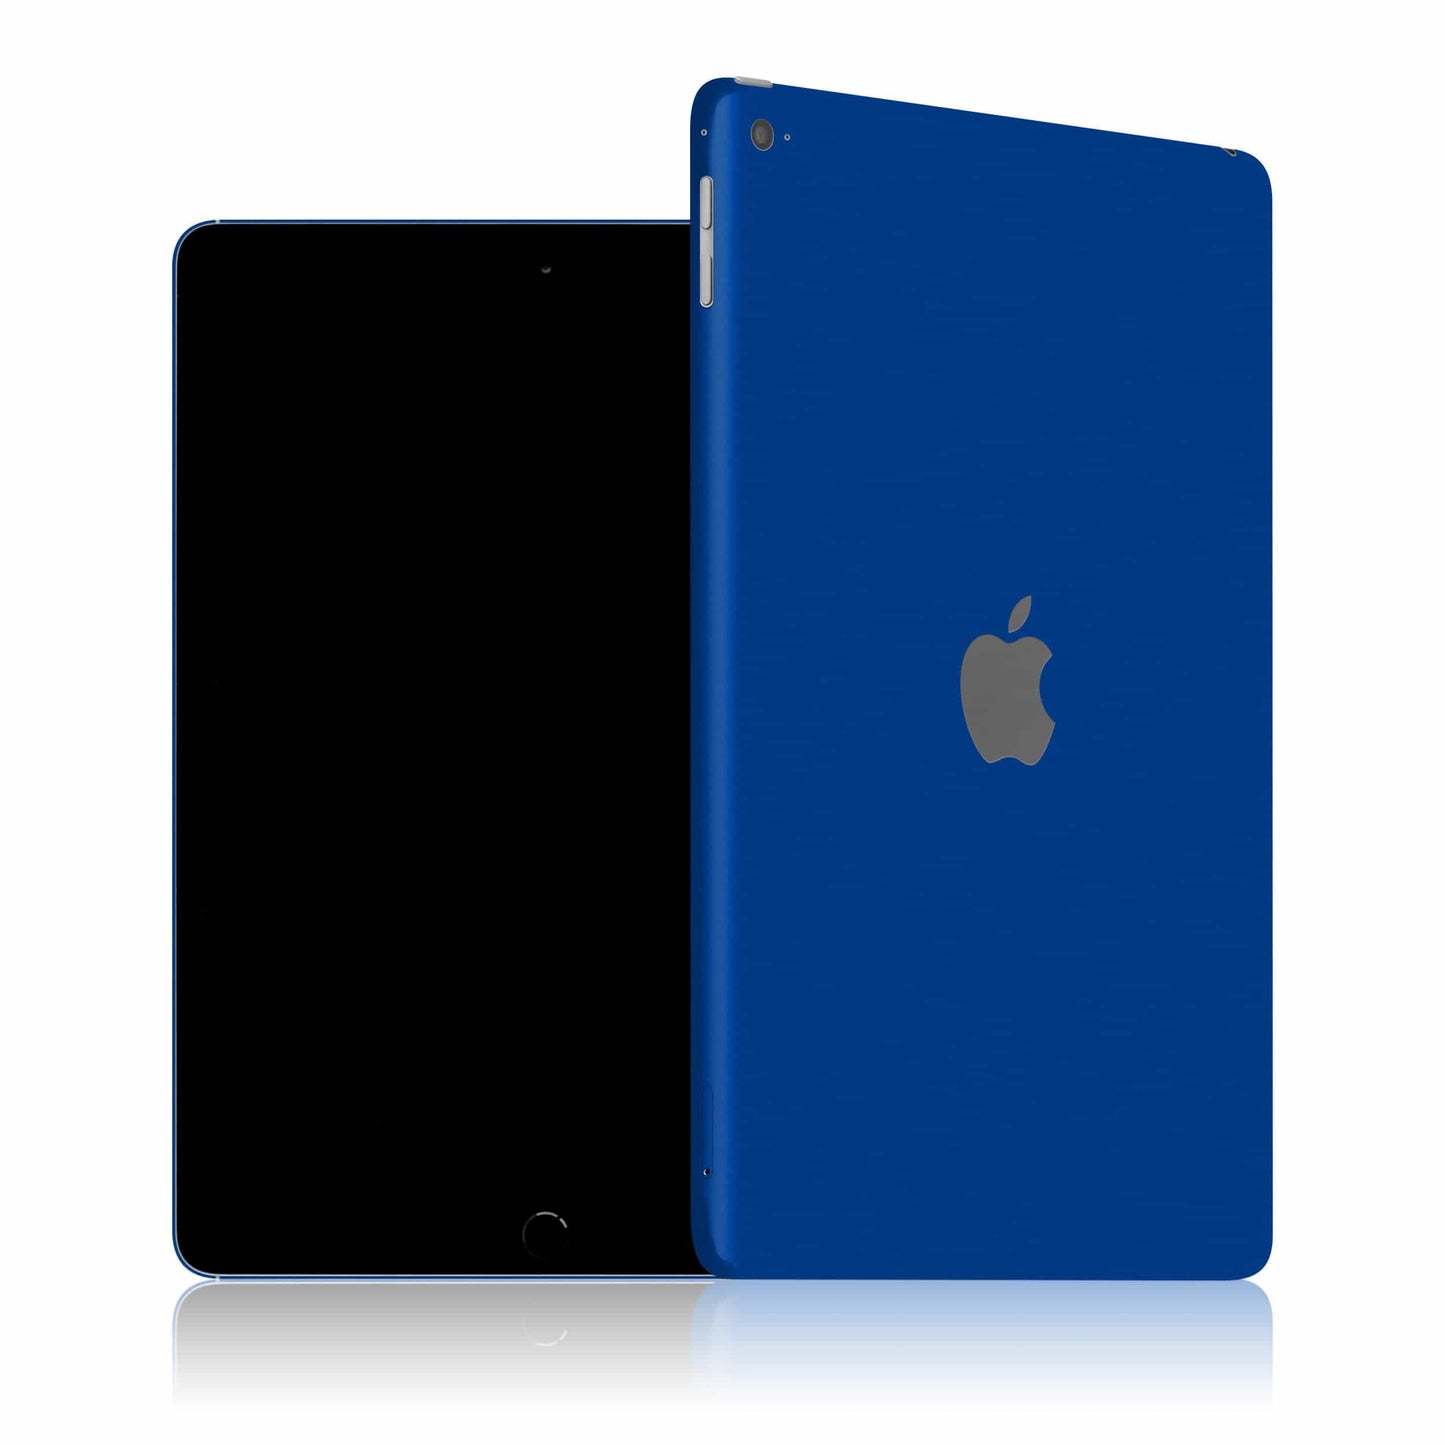 iPad Air 2 - Color Edition